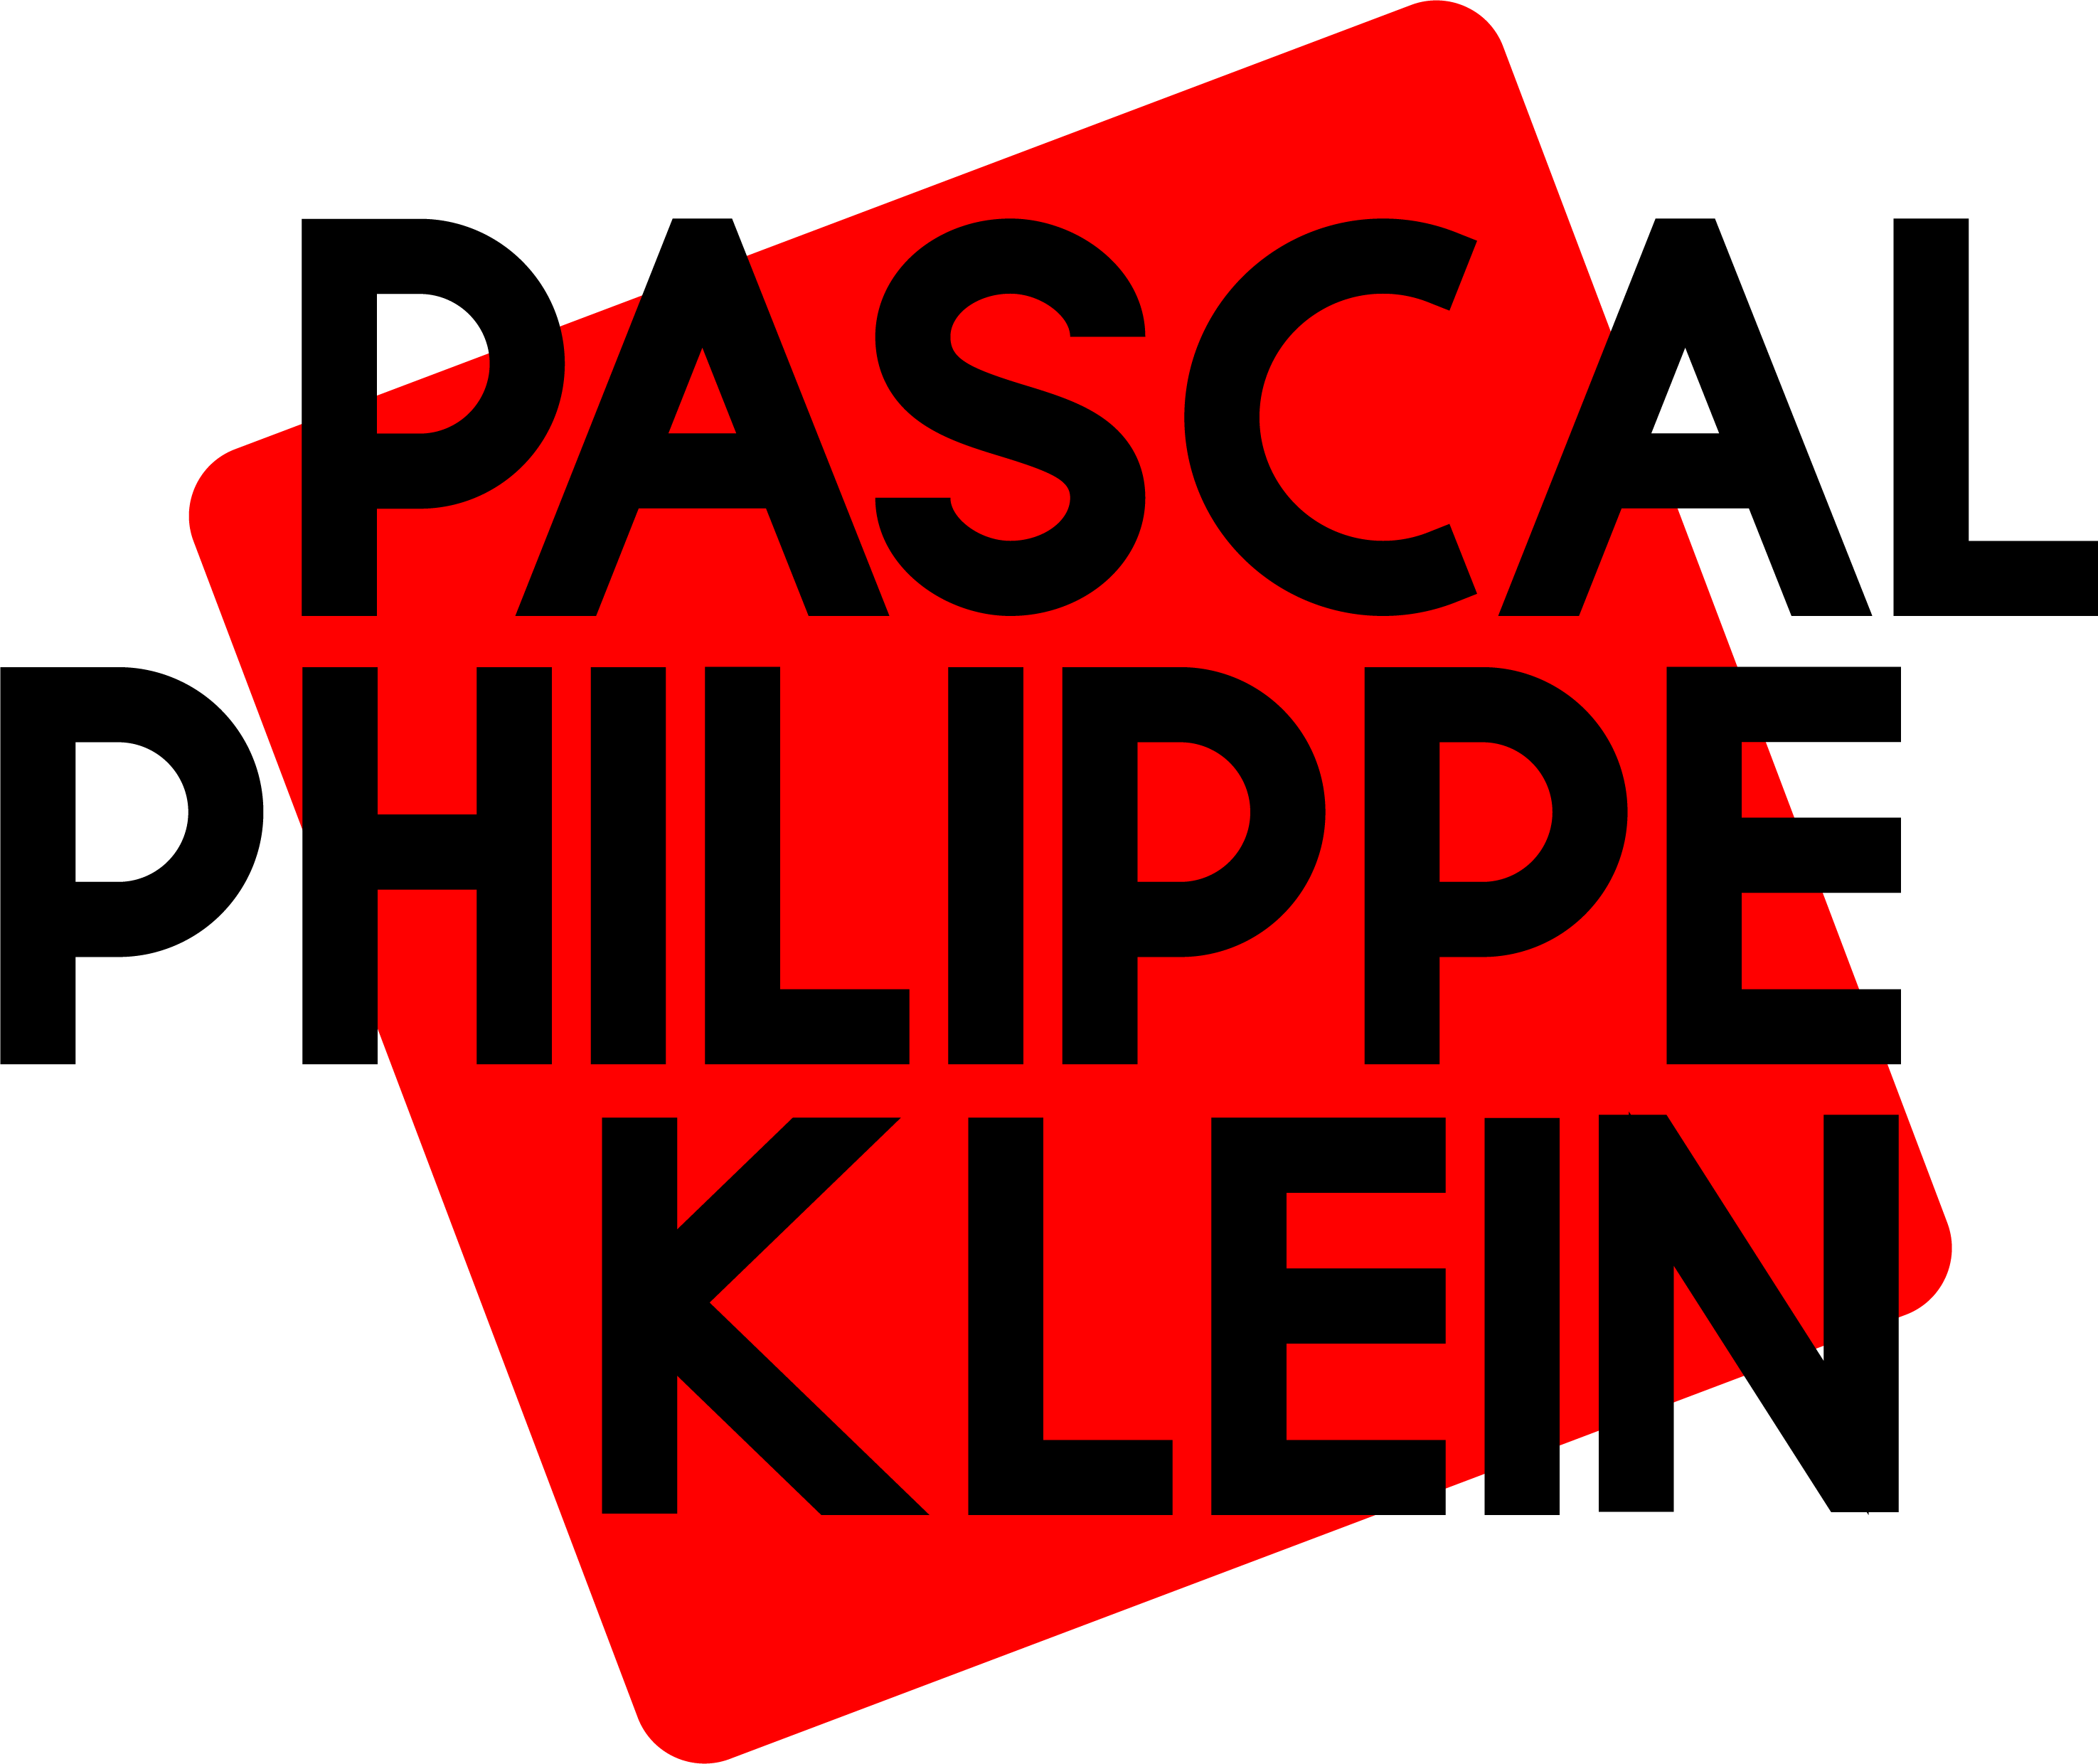 Pascal Philippe Klein